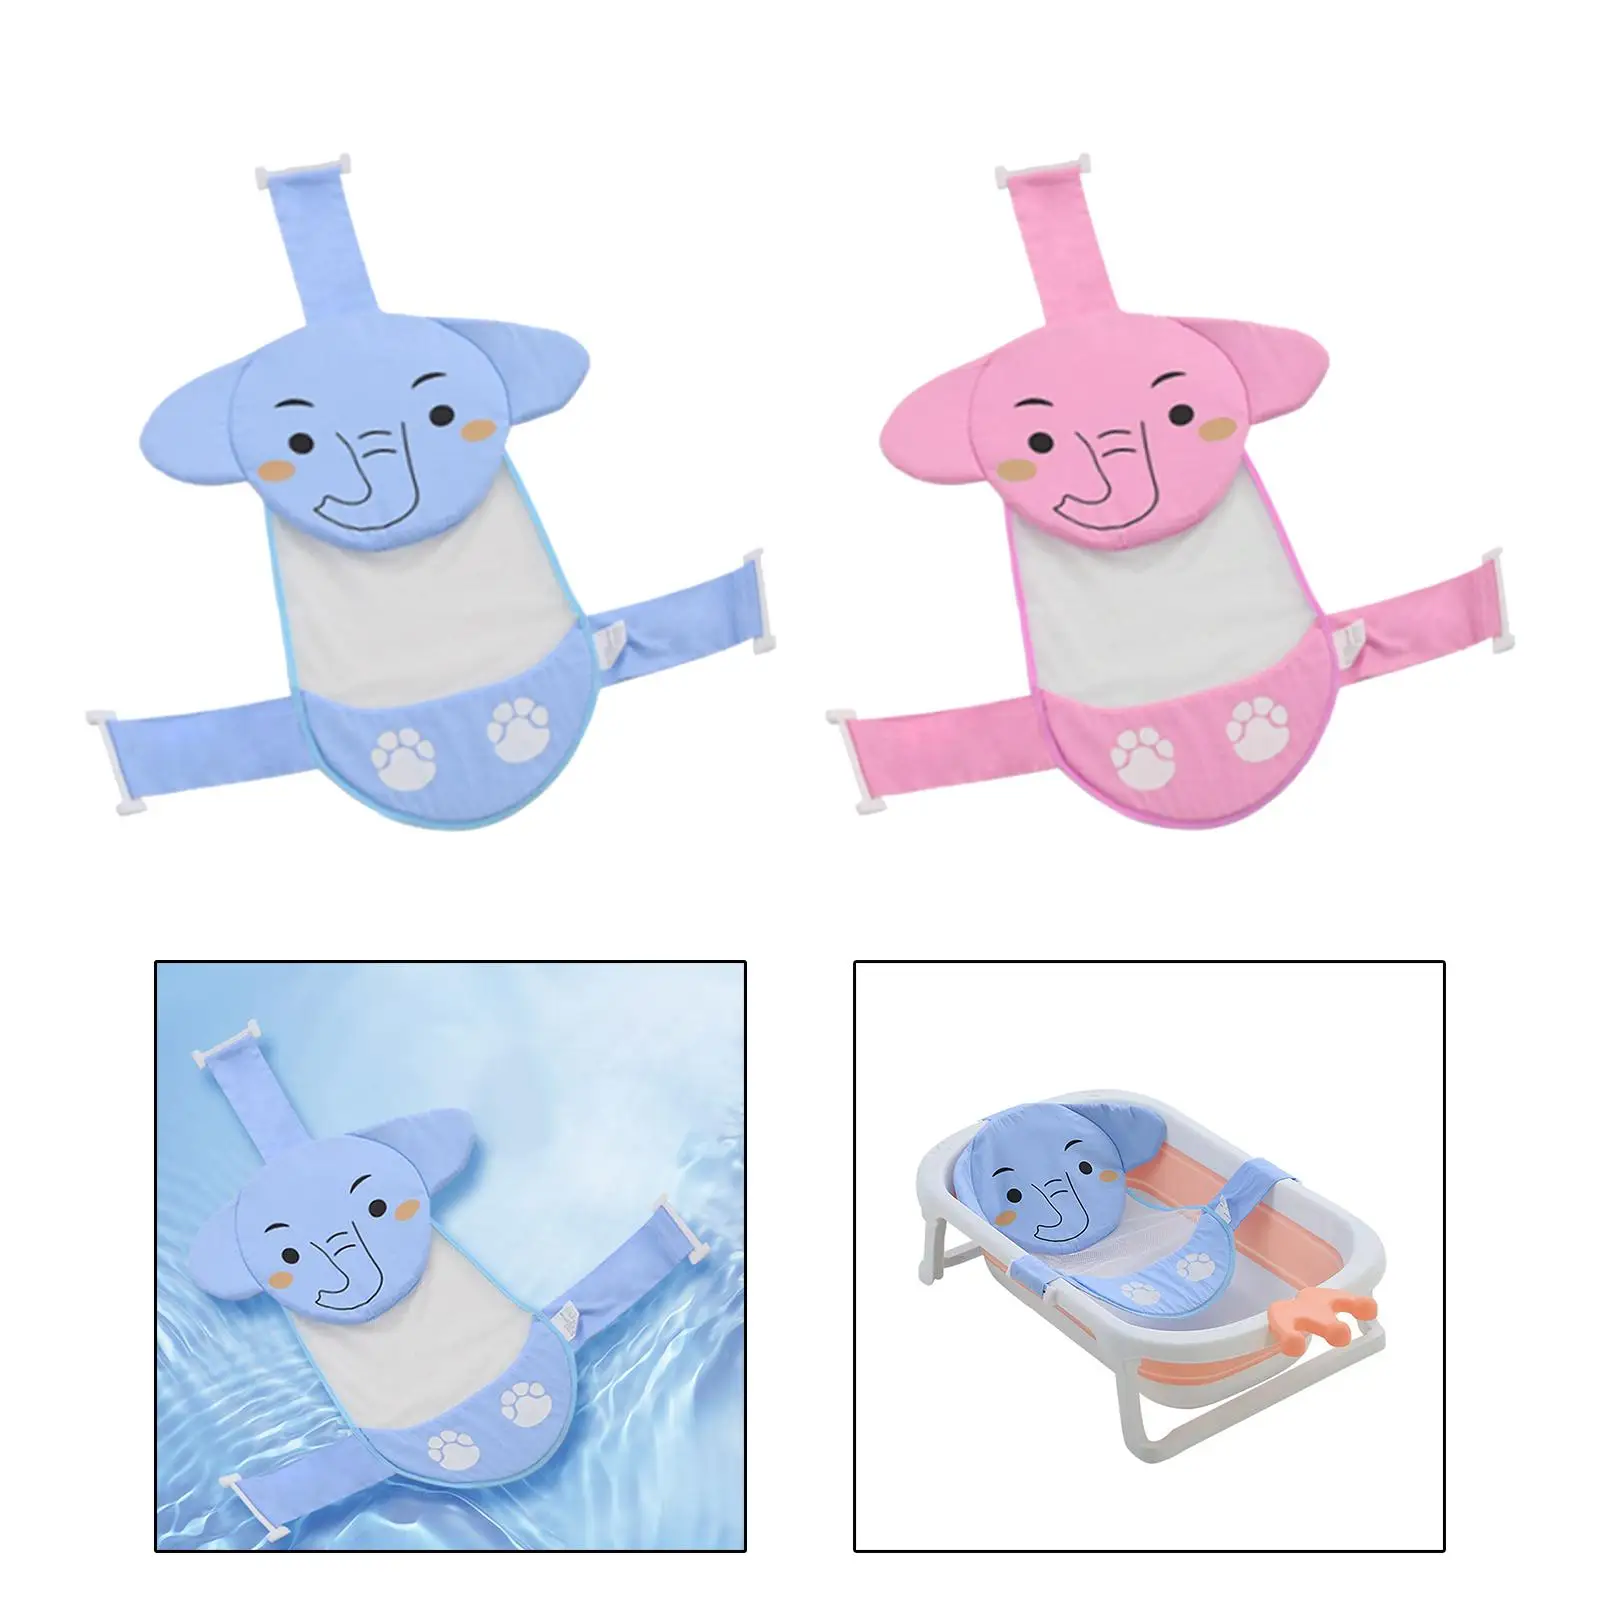 Cute Elephant Baby Bath Cushion Pad Non Slip Universal for Bathtub Infant Bath Support Seat Floating Bathing Tub Seat for Infant